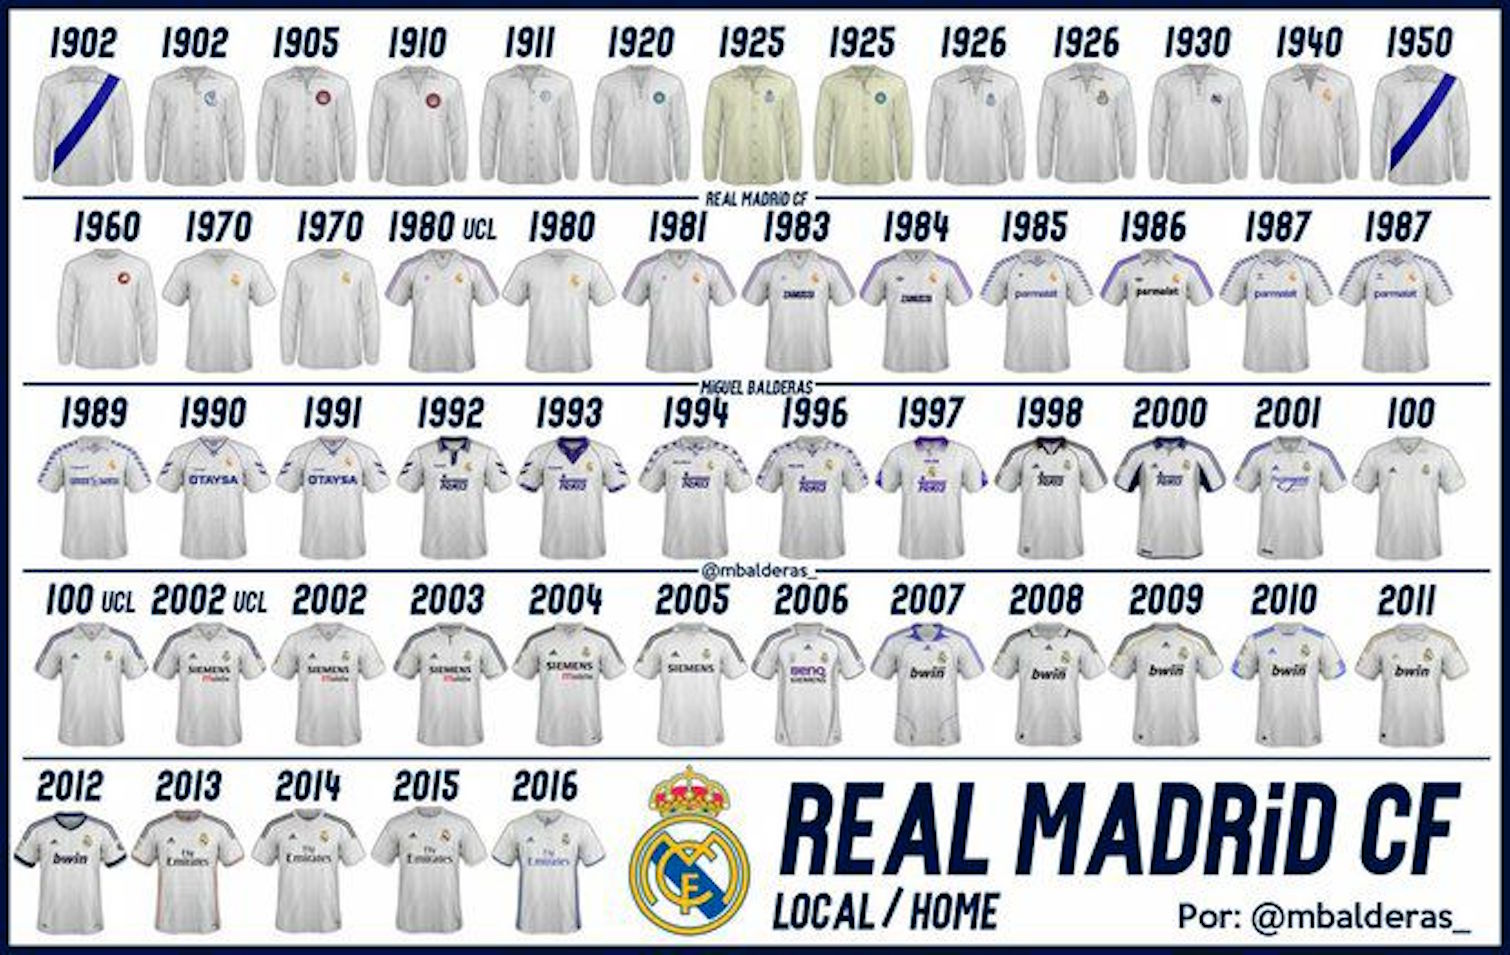 Real Madrid Kits throughout history 